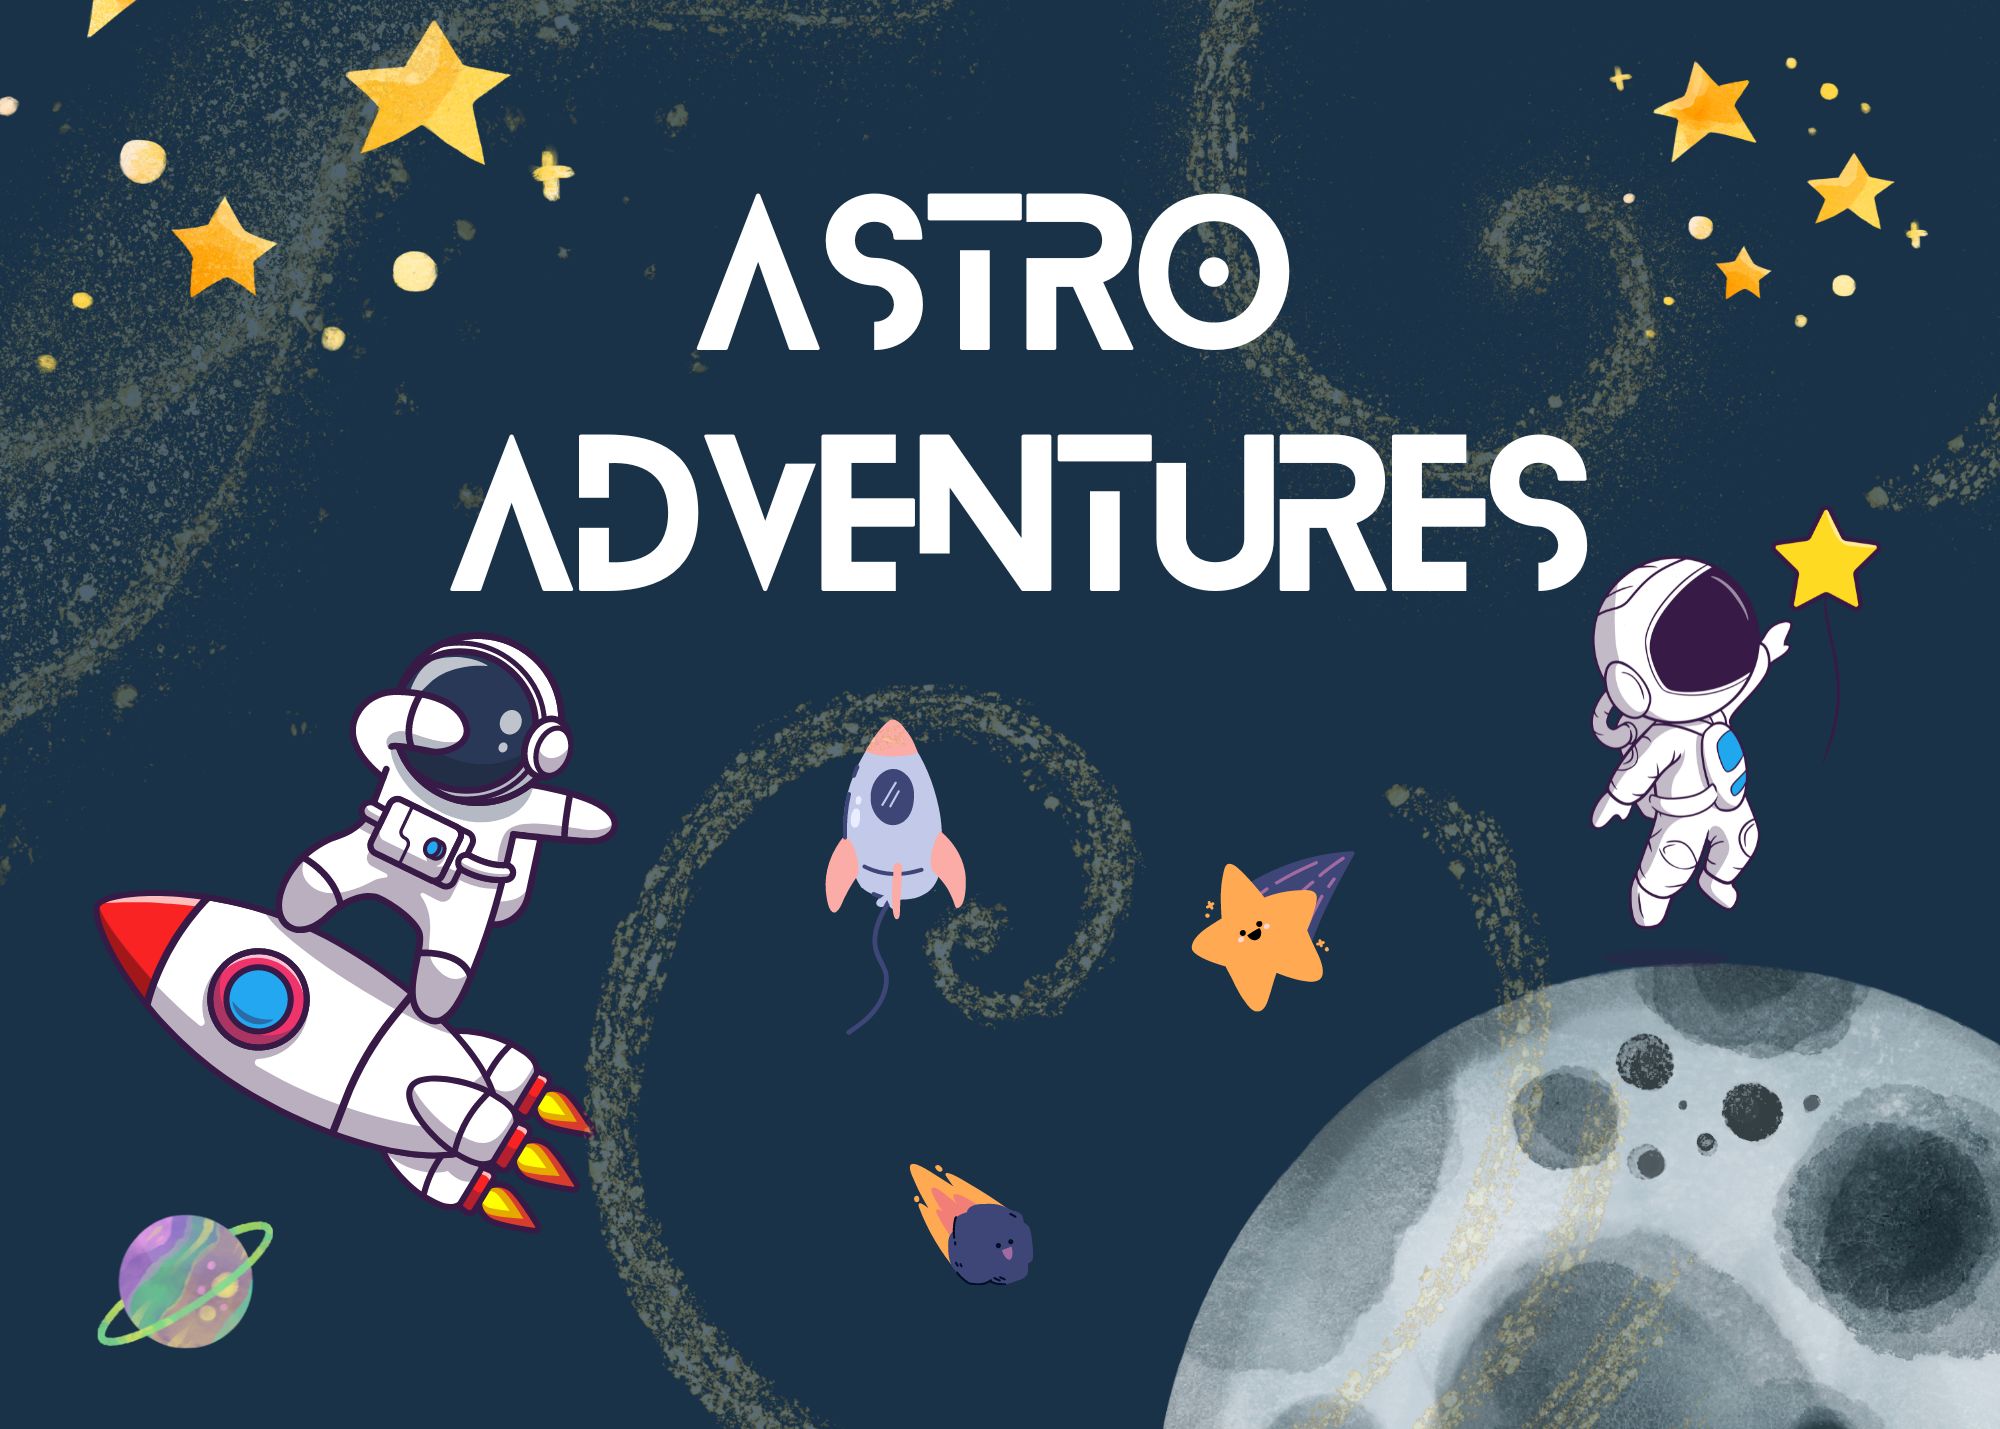 Astro Adventures. Astronauts in space.